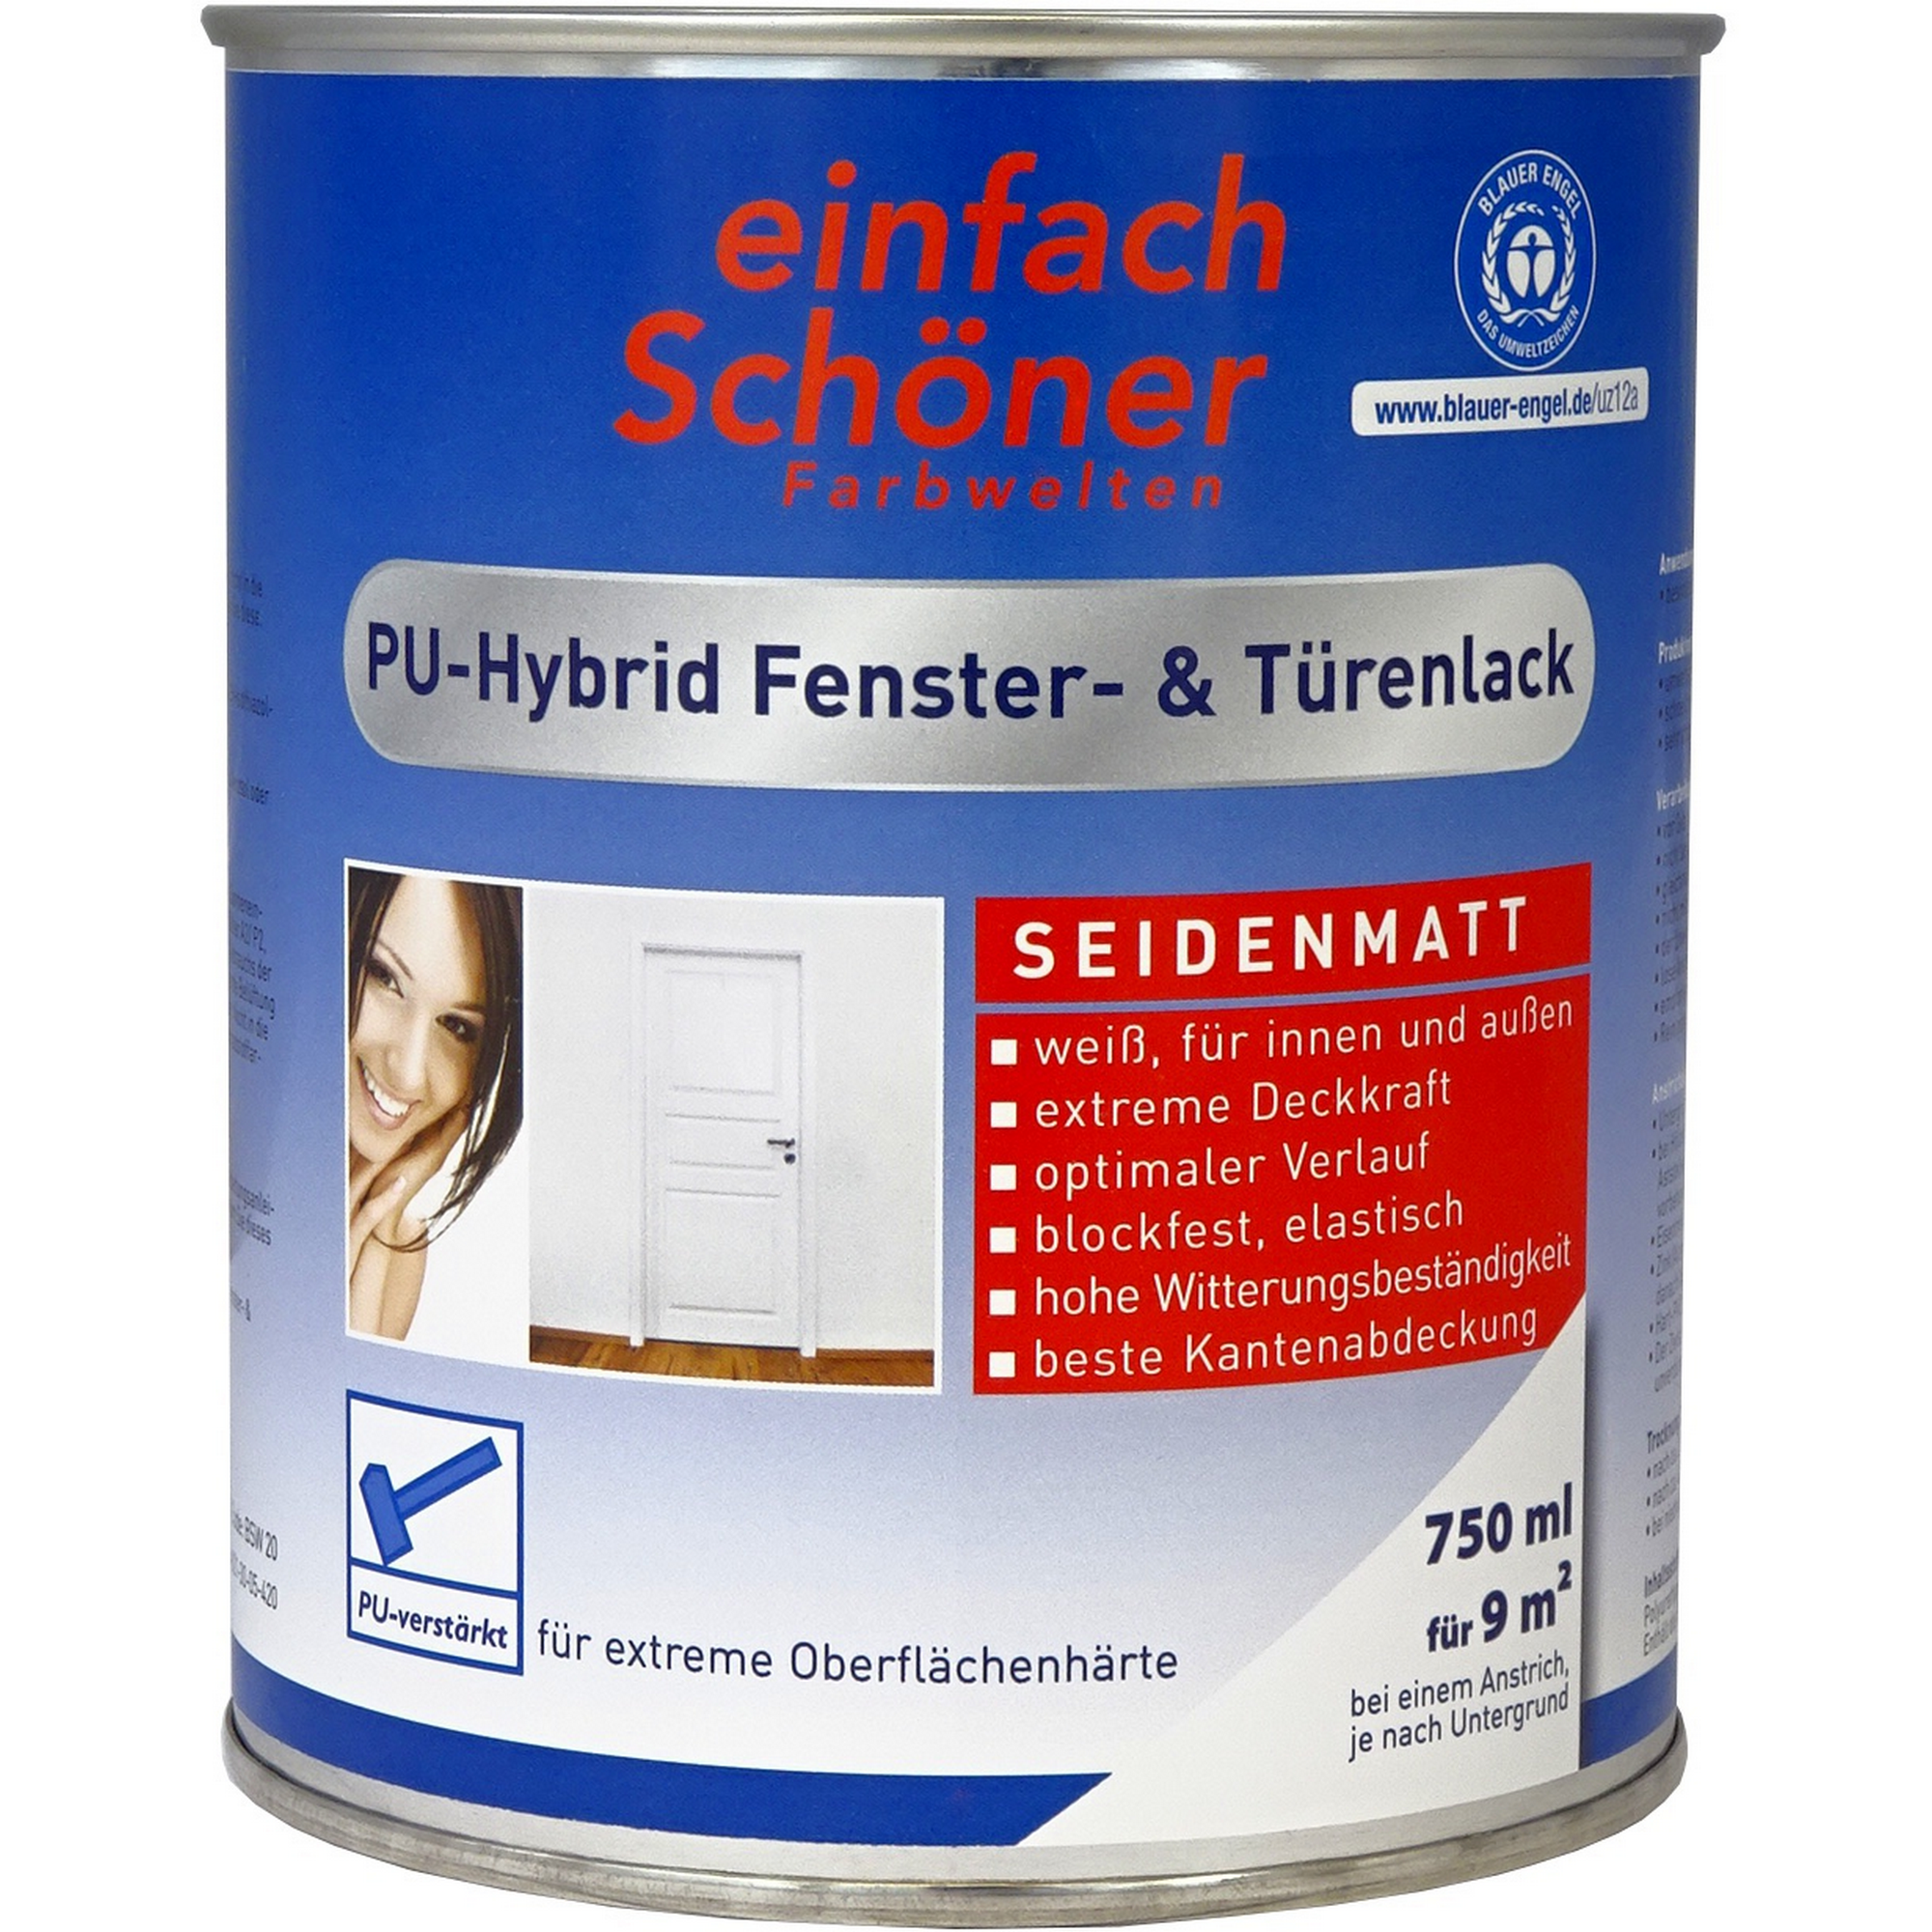 PU-Hybrid Fenster- & Türenlack weiß seidenmatt 750 ml + product picture